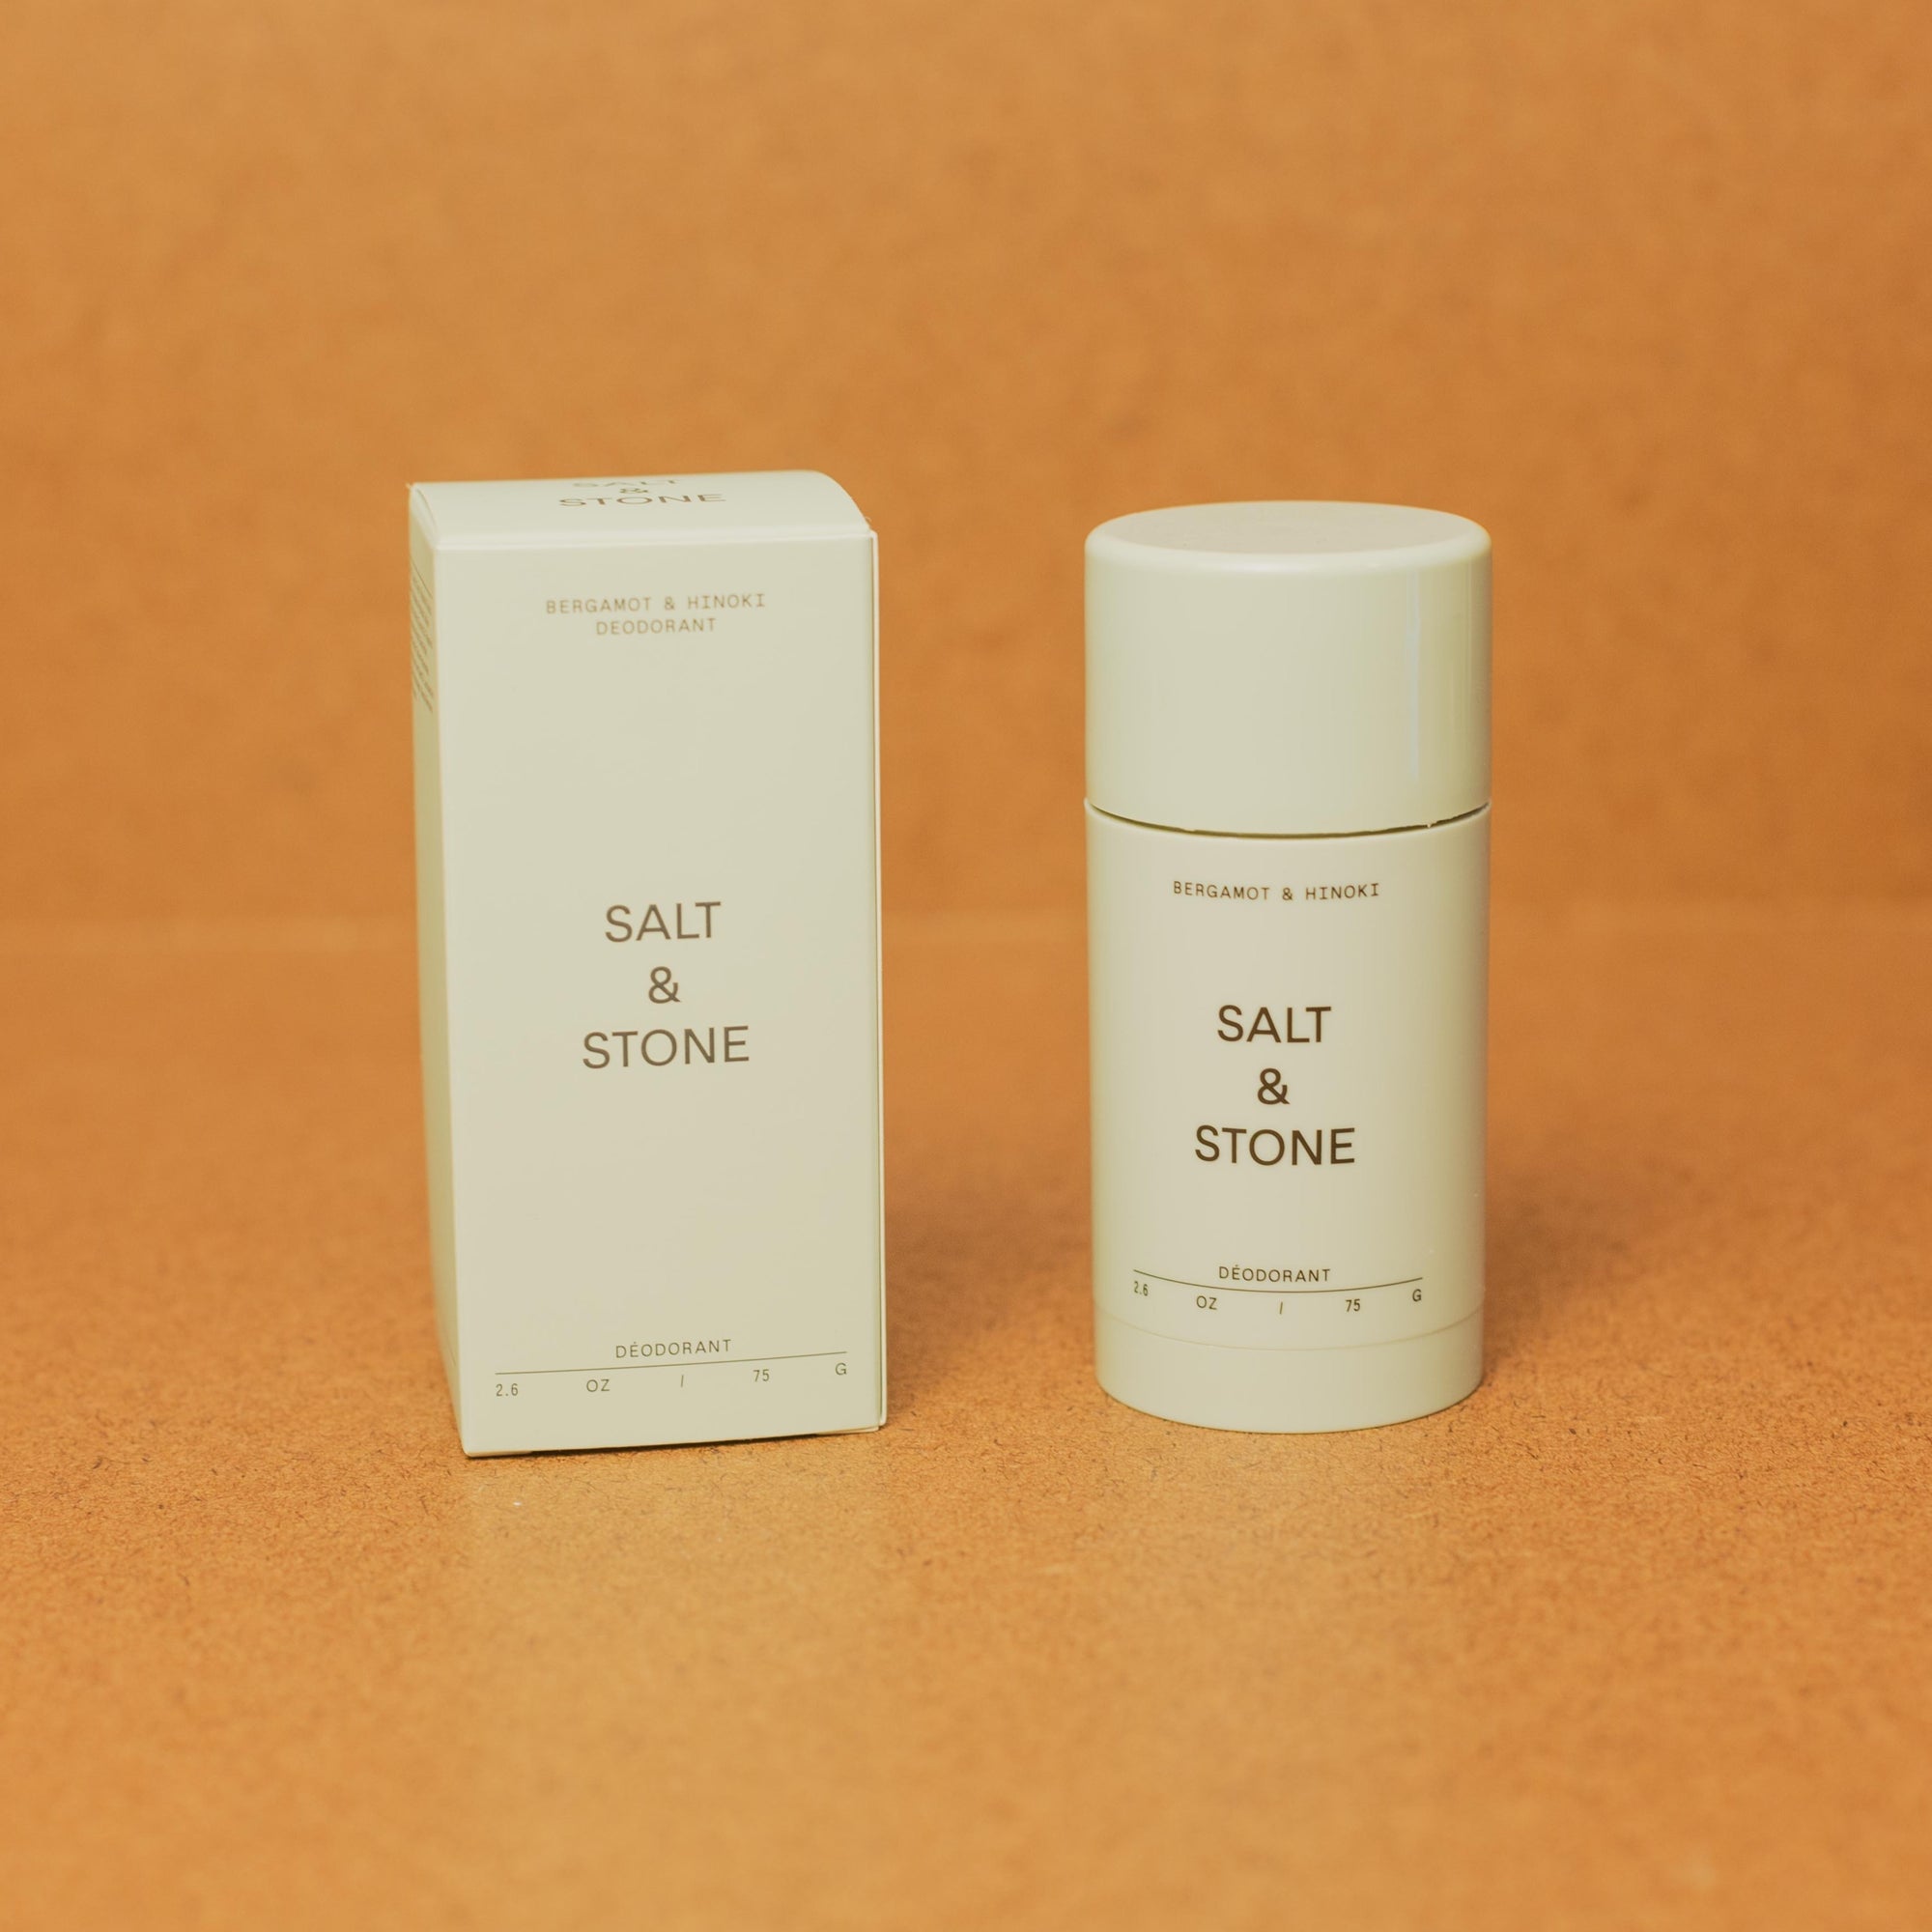 Salt and Stone Deodorant - Bergamont & Hinoki front view